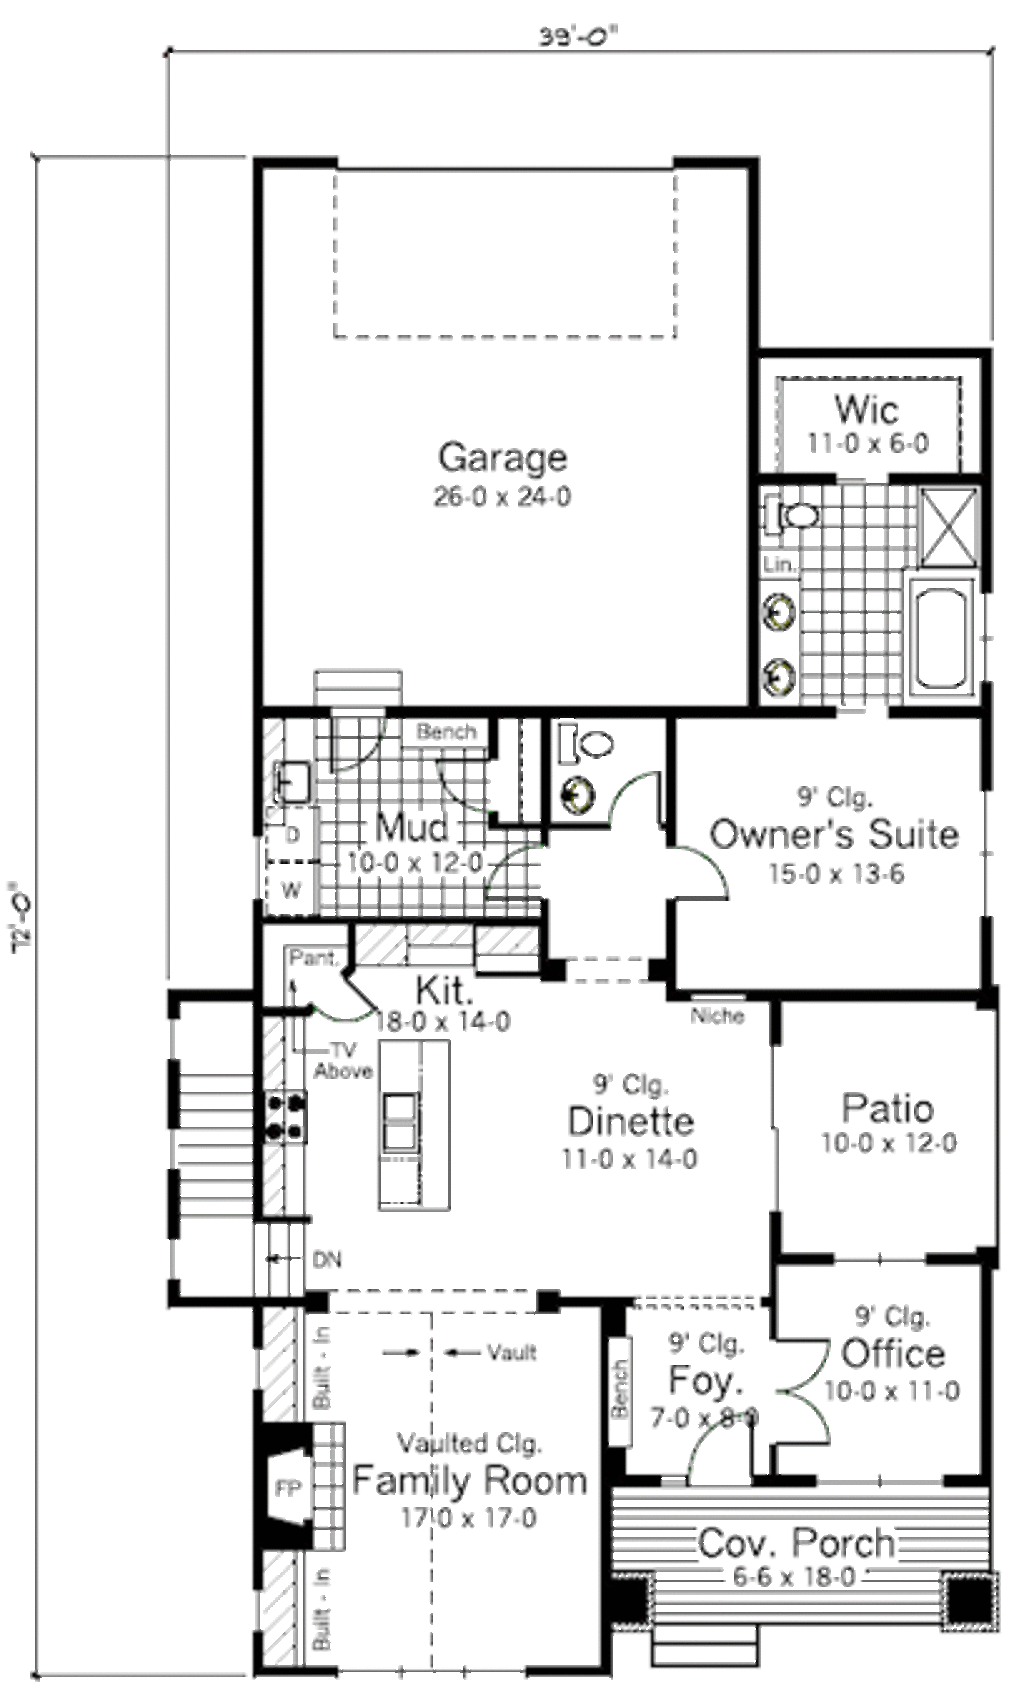 24x24 House PDF FloorPlan 1,088 sqft 2 Bedroom 2.5 Bath Model 12A 